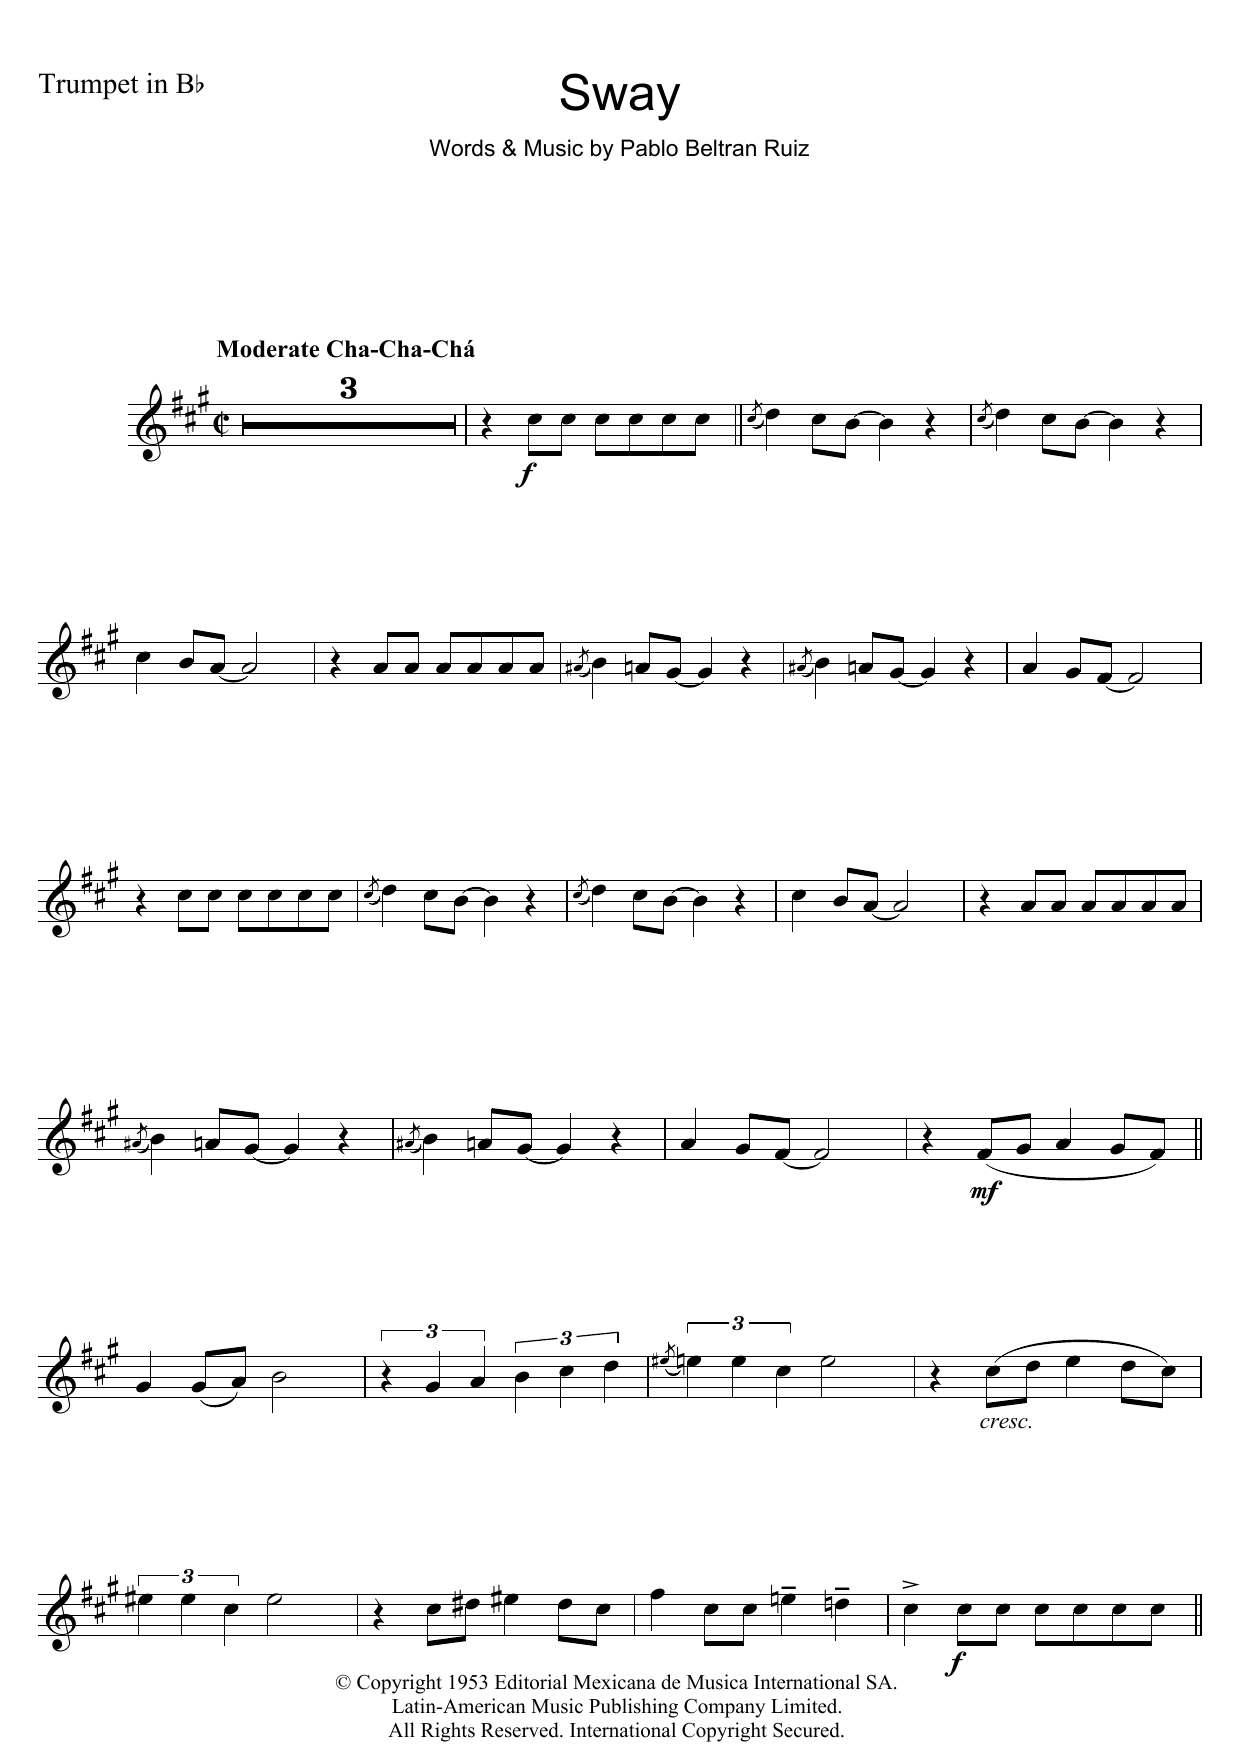 Pablo Beltran Ruiz Sway (Quien Sera) Sheet Music Notes & Chords for Trumpet - Download or Print PDF